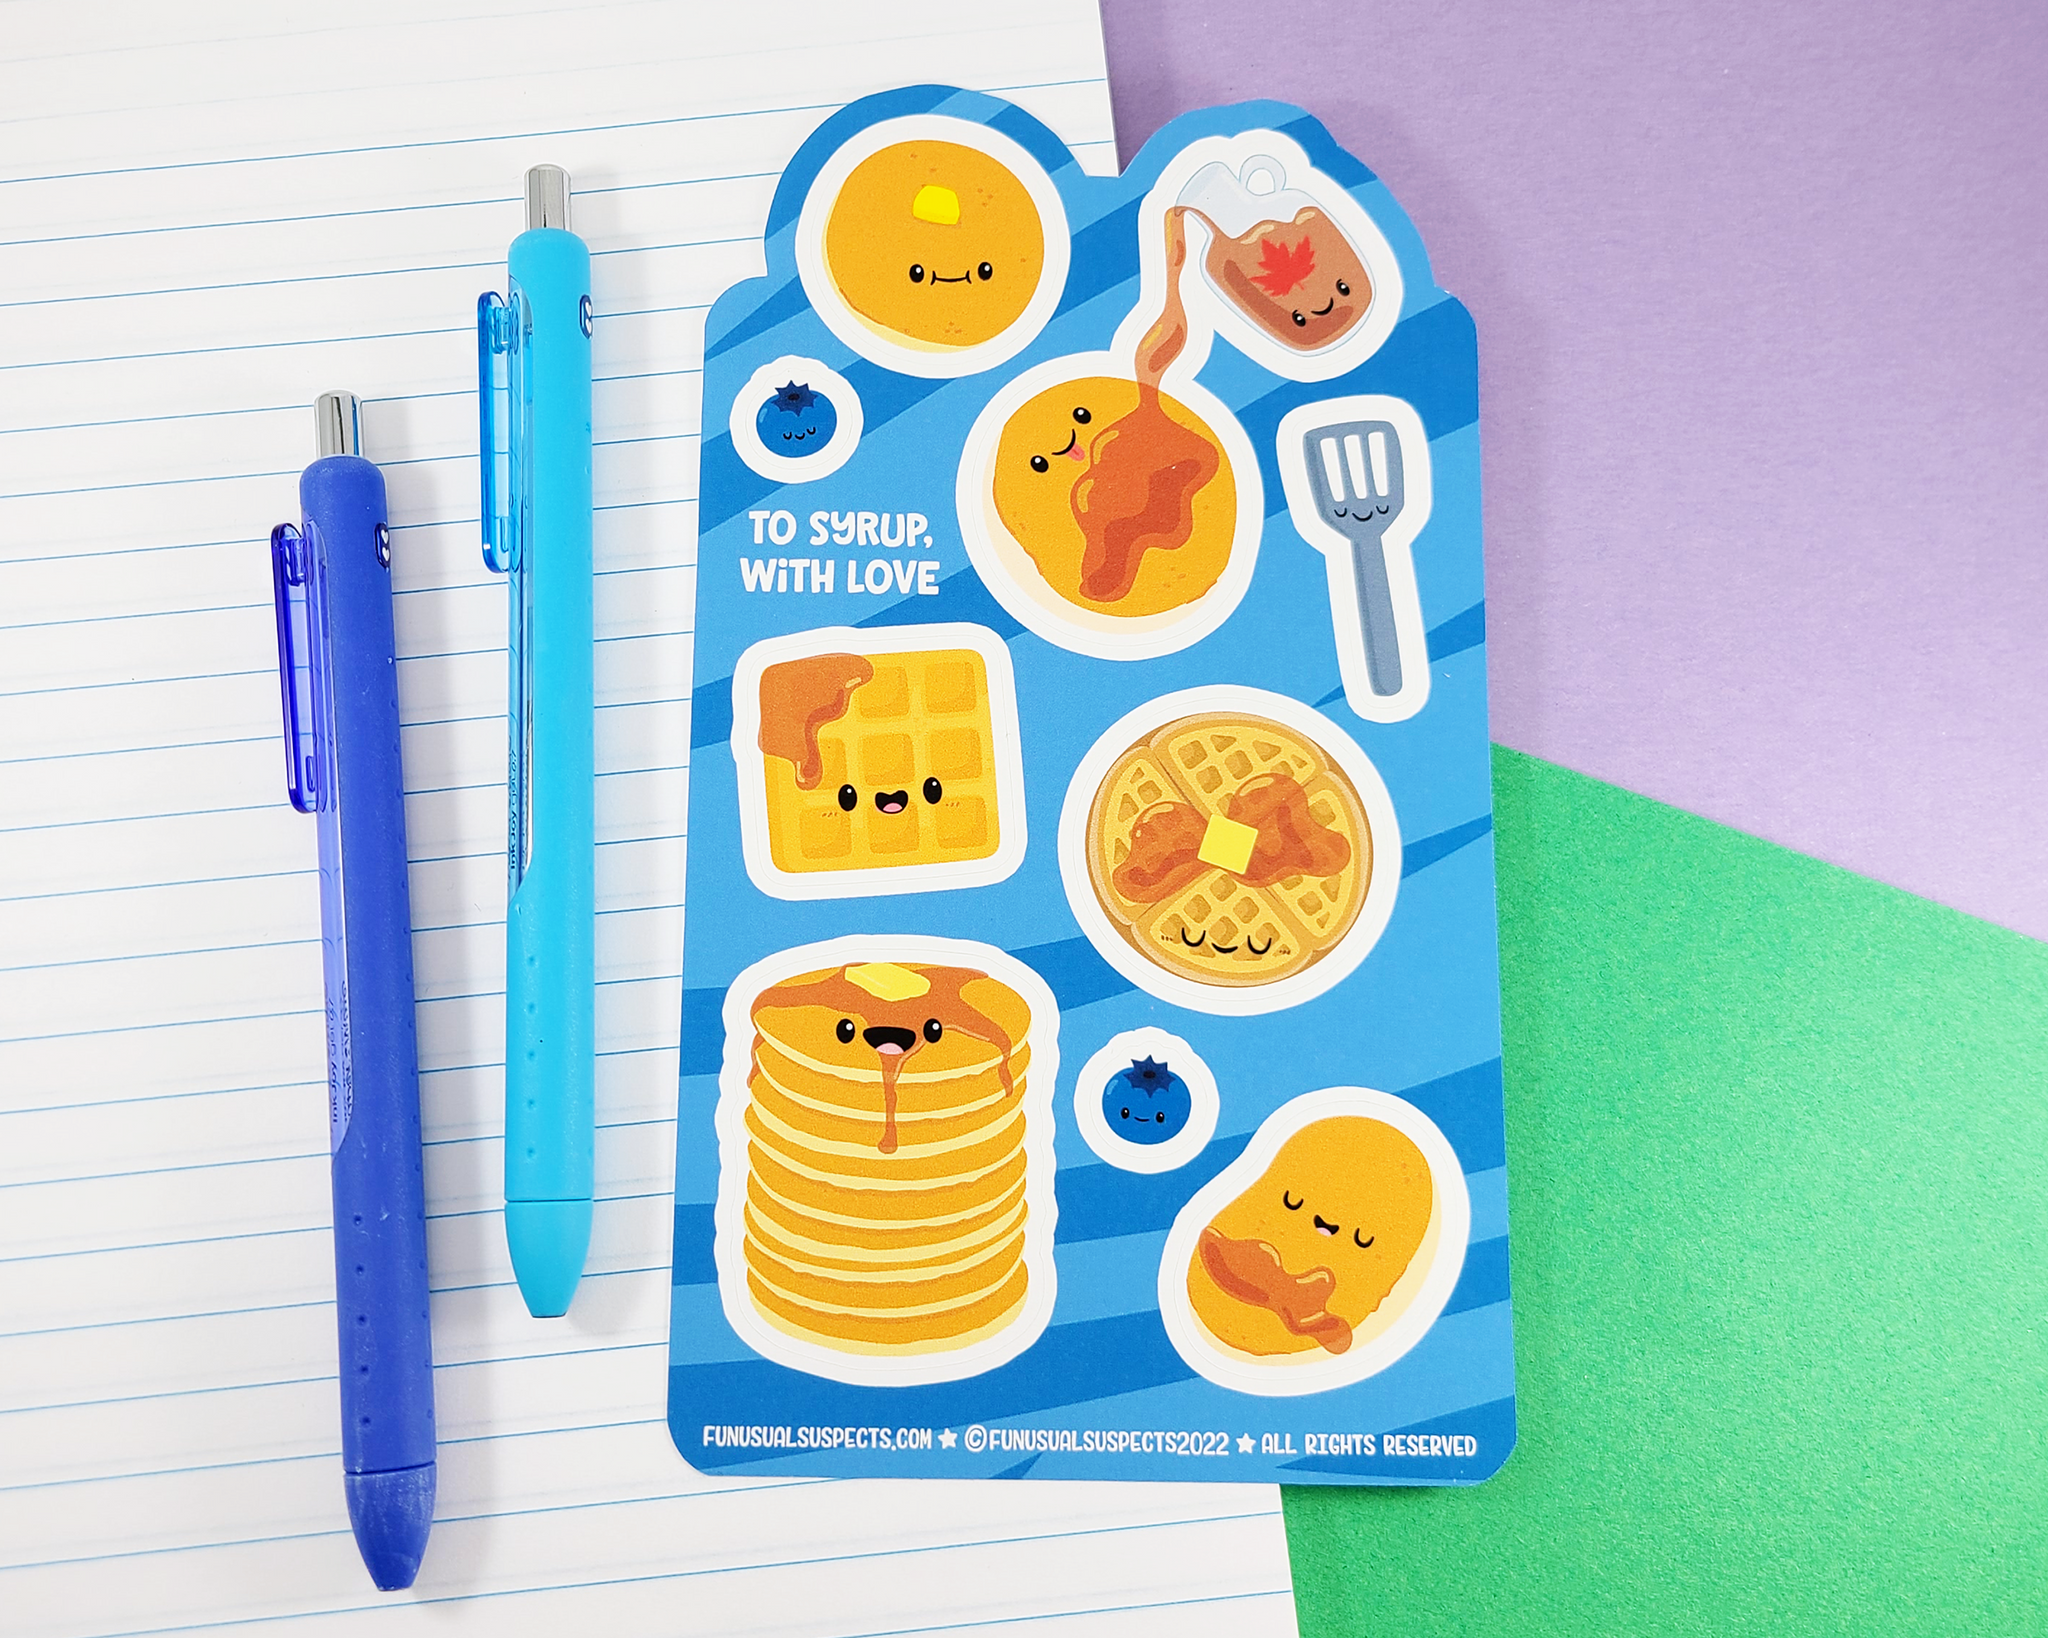 Pancakes & Waffles Sticker Sheet